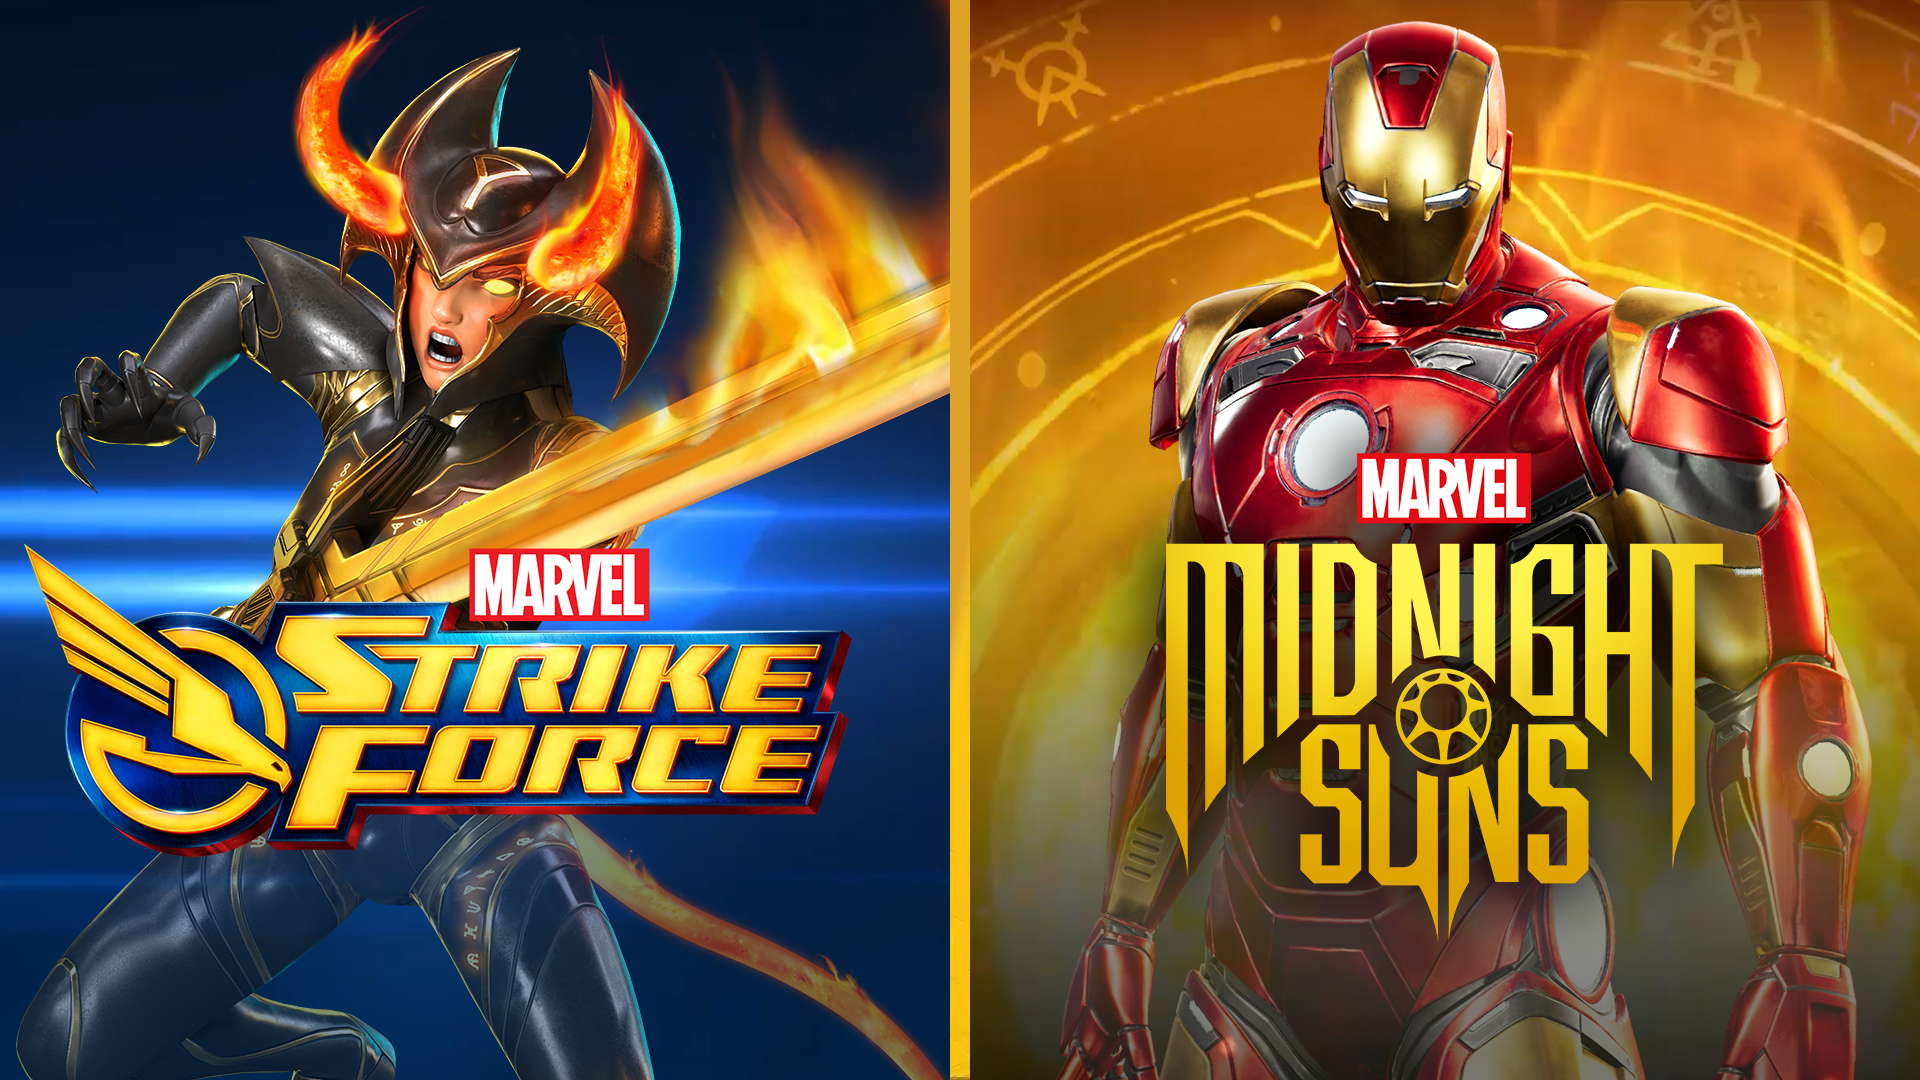 Marvel's Midnight Suns x Marvel Snap - Conquest Reward Iron Man